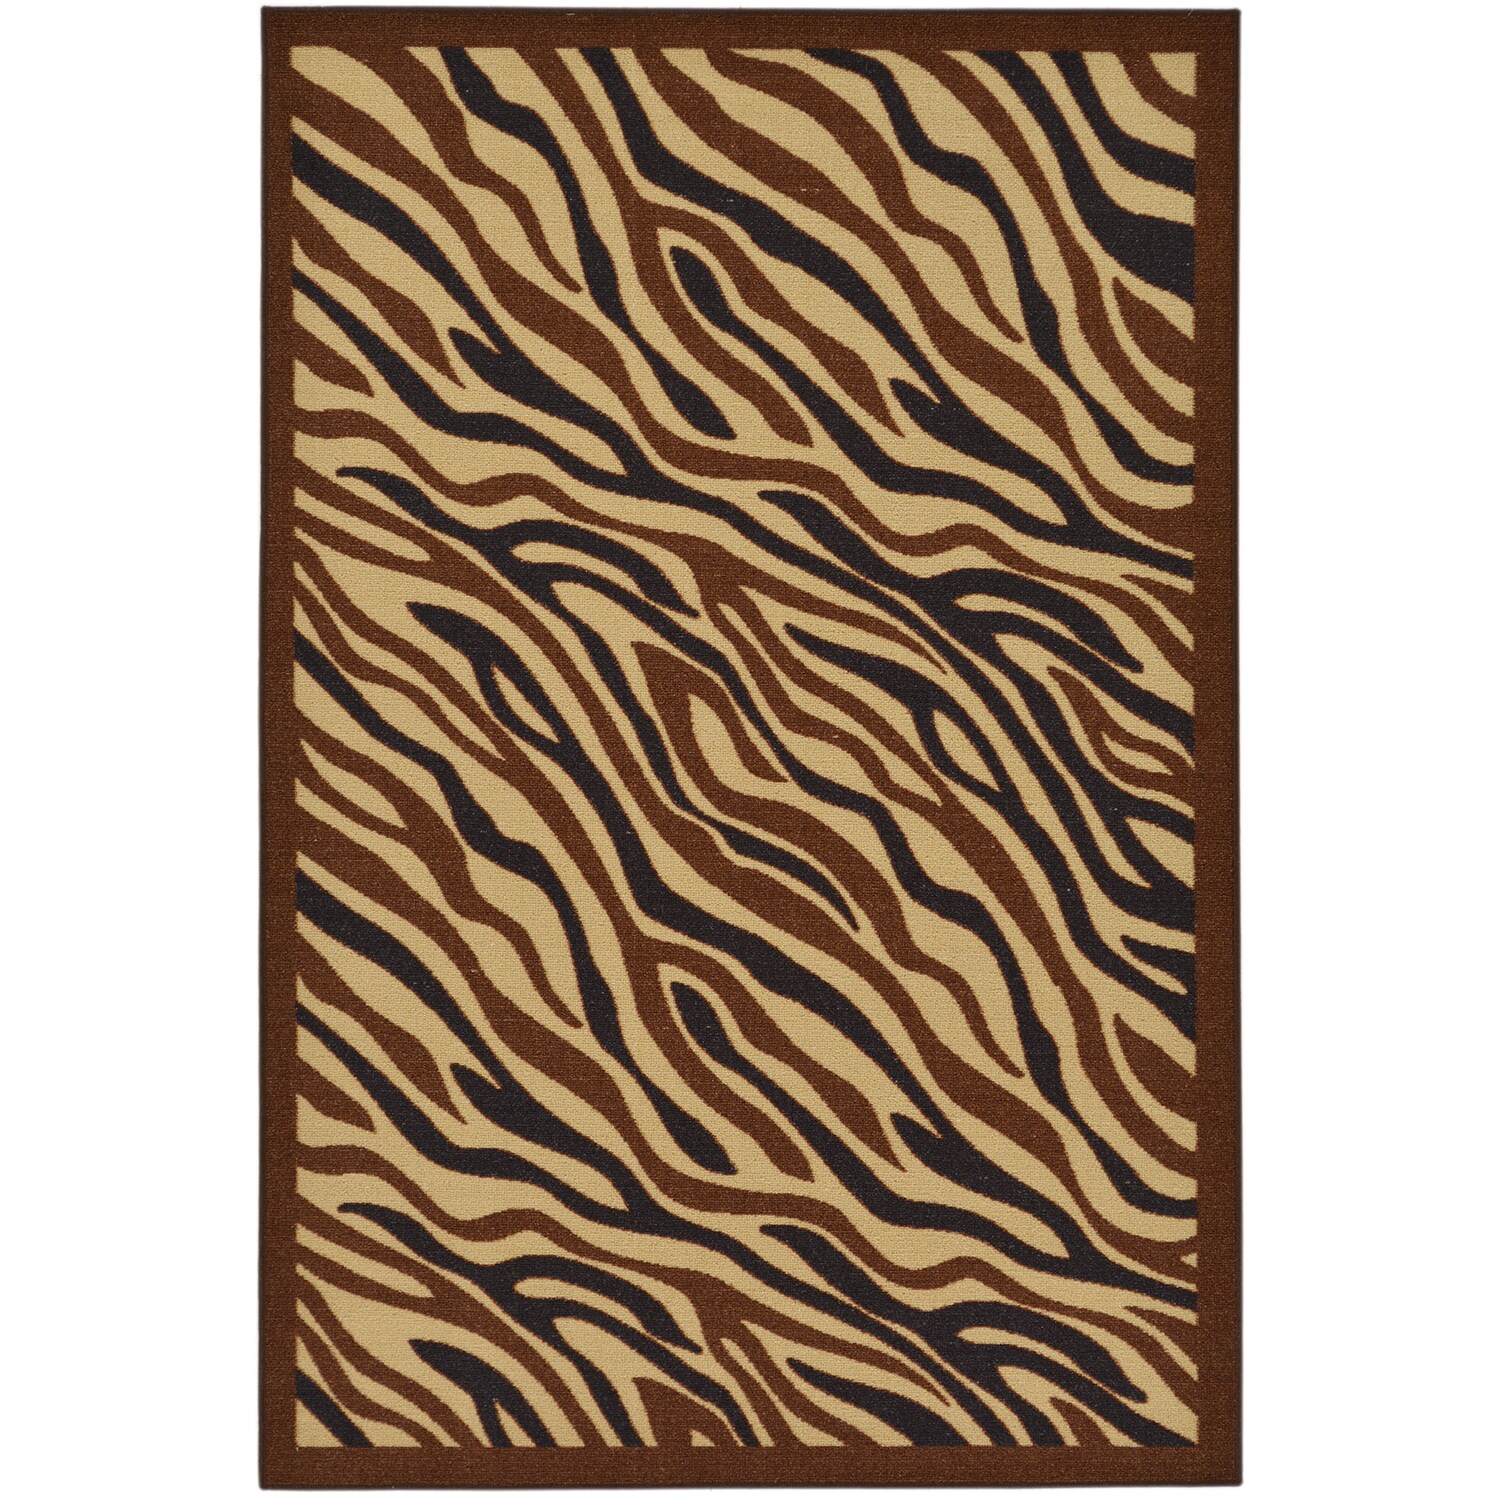 Chocolate Animal Print Zebra Design Non skid Area Rug (5 X 66)